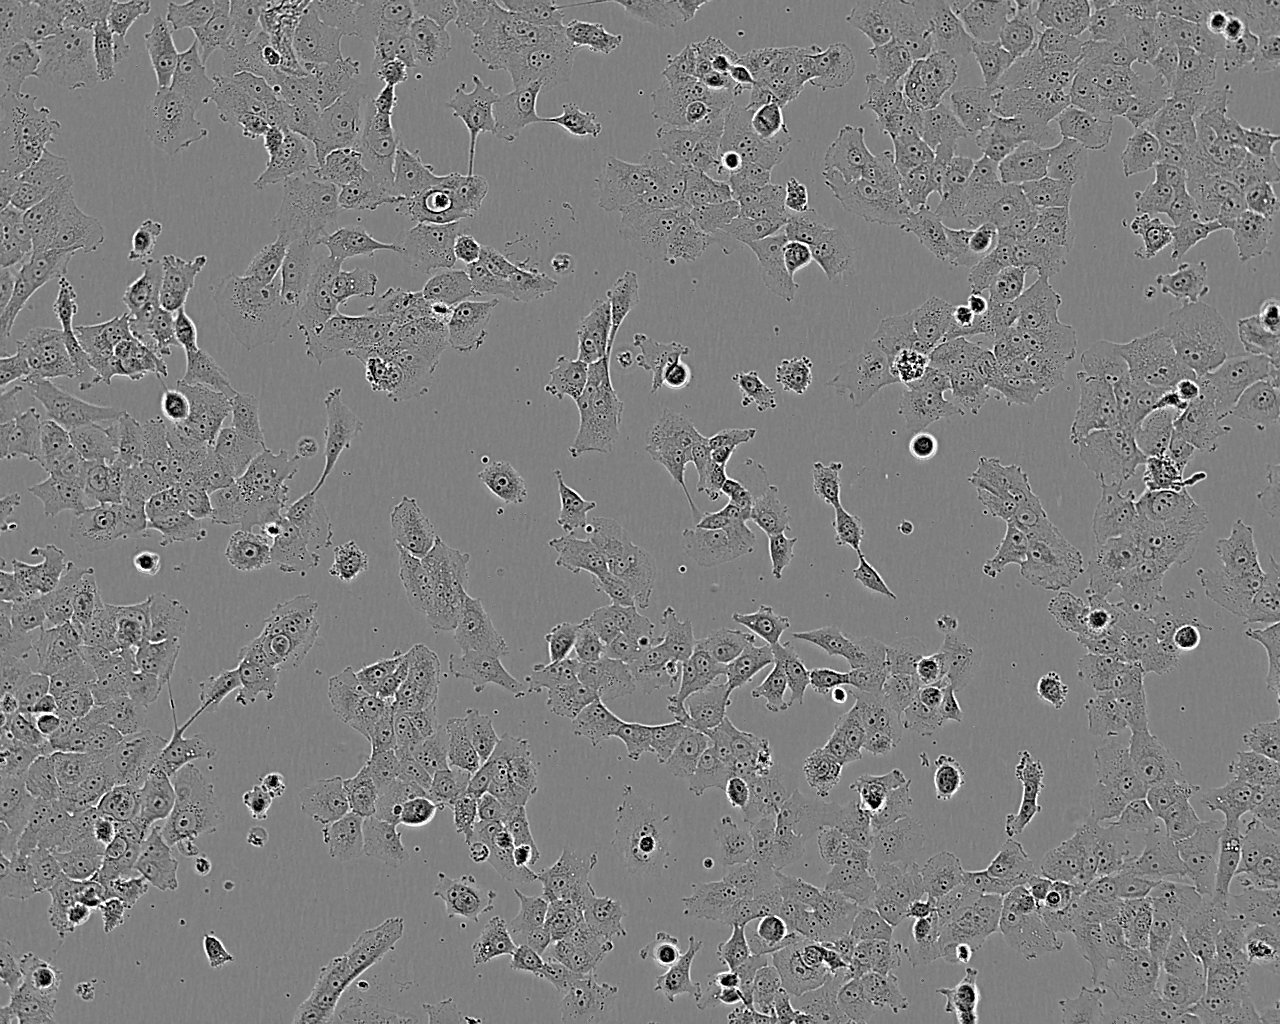 COLO 829 Cells|人黑色素瘤细胞系,COLO 829 Cells